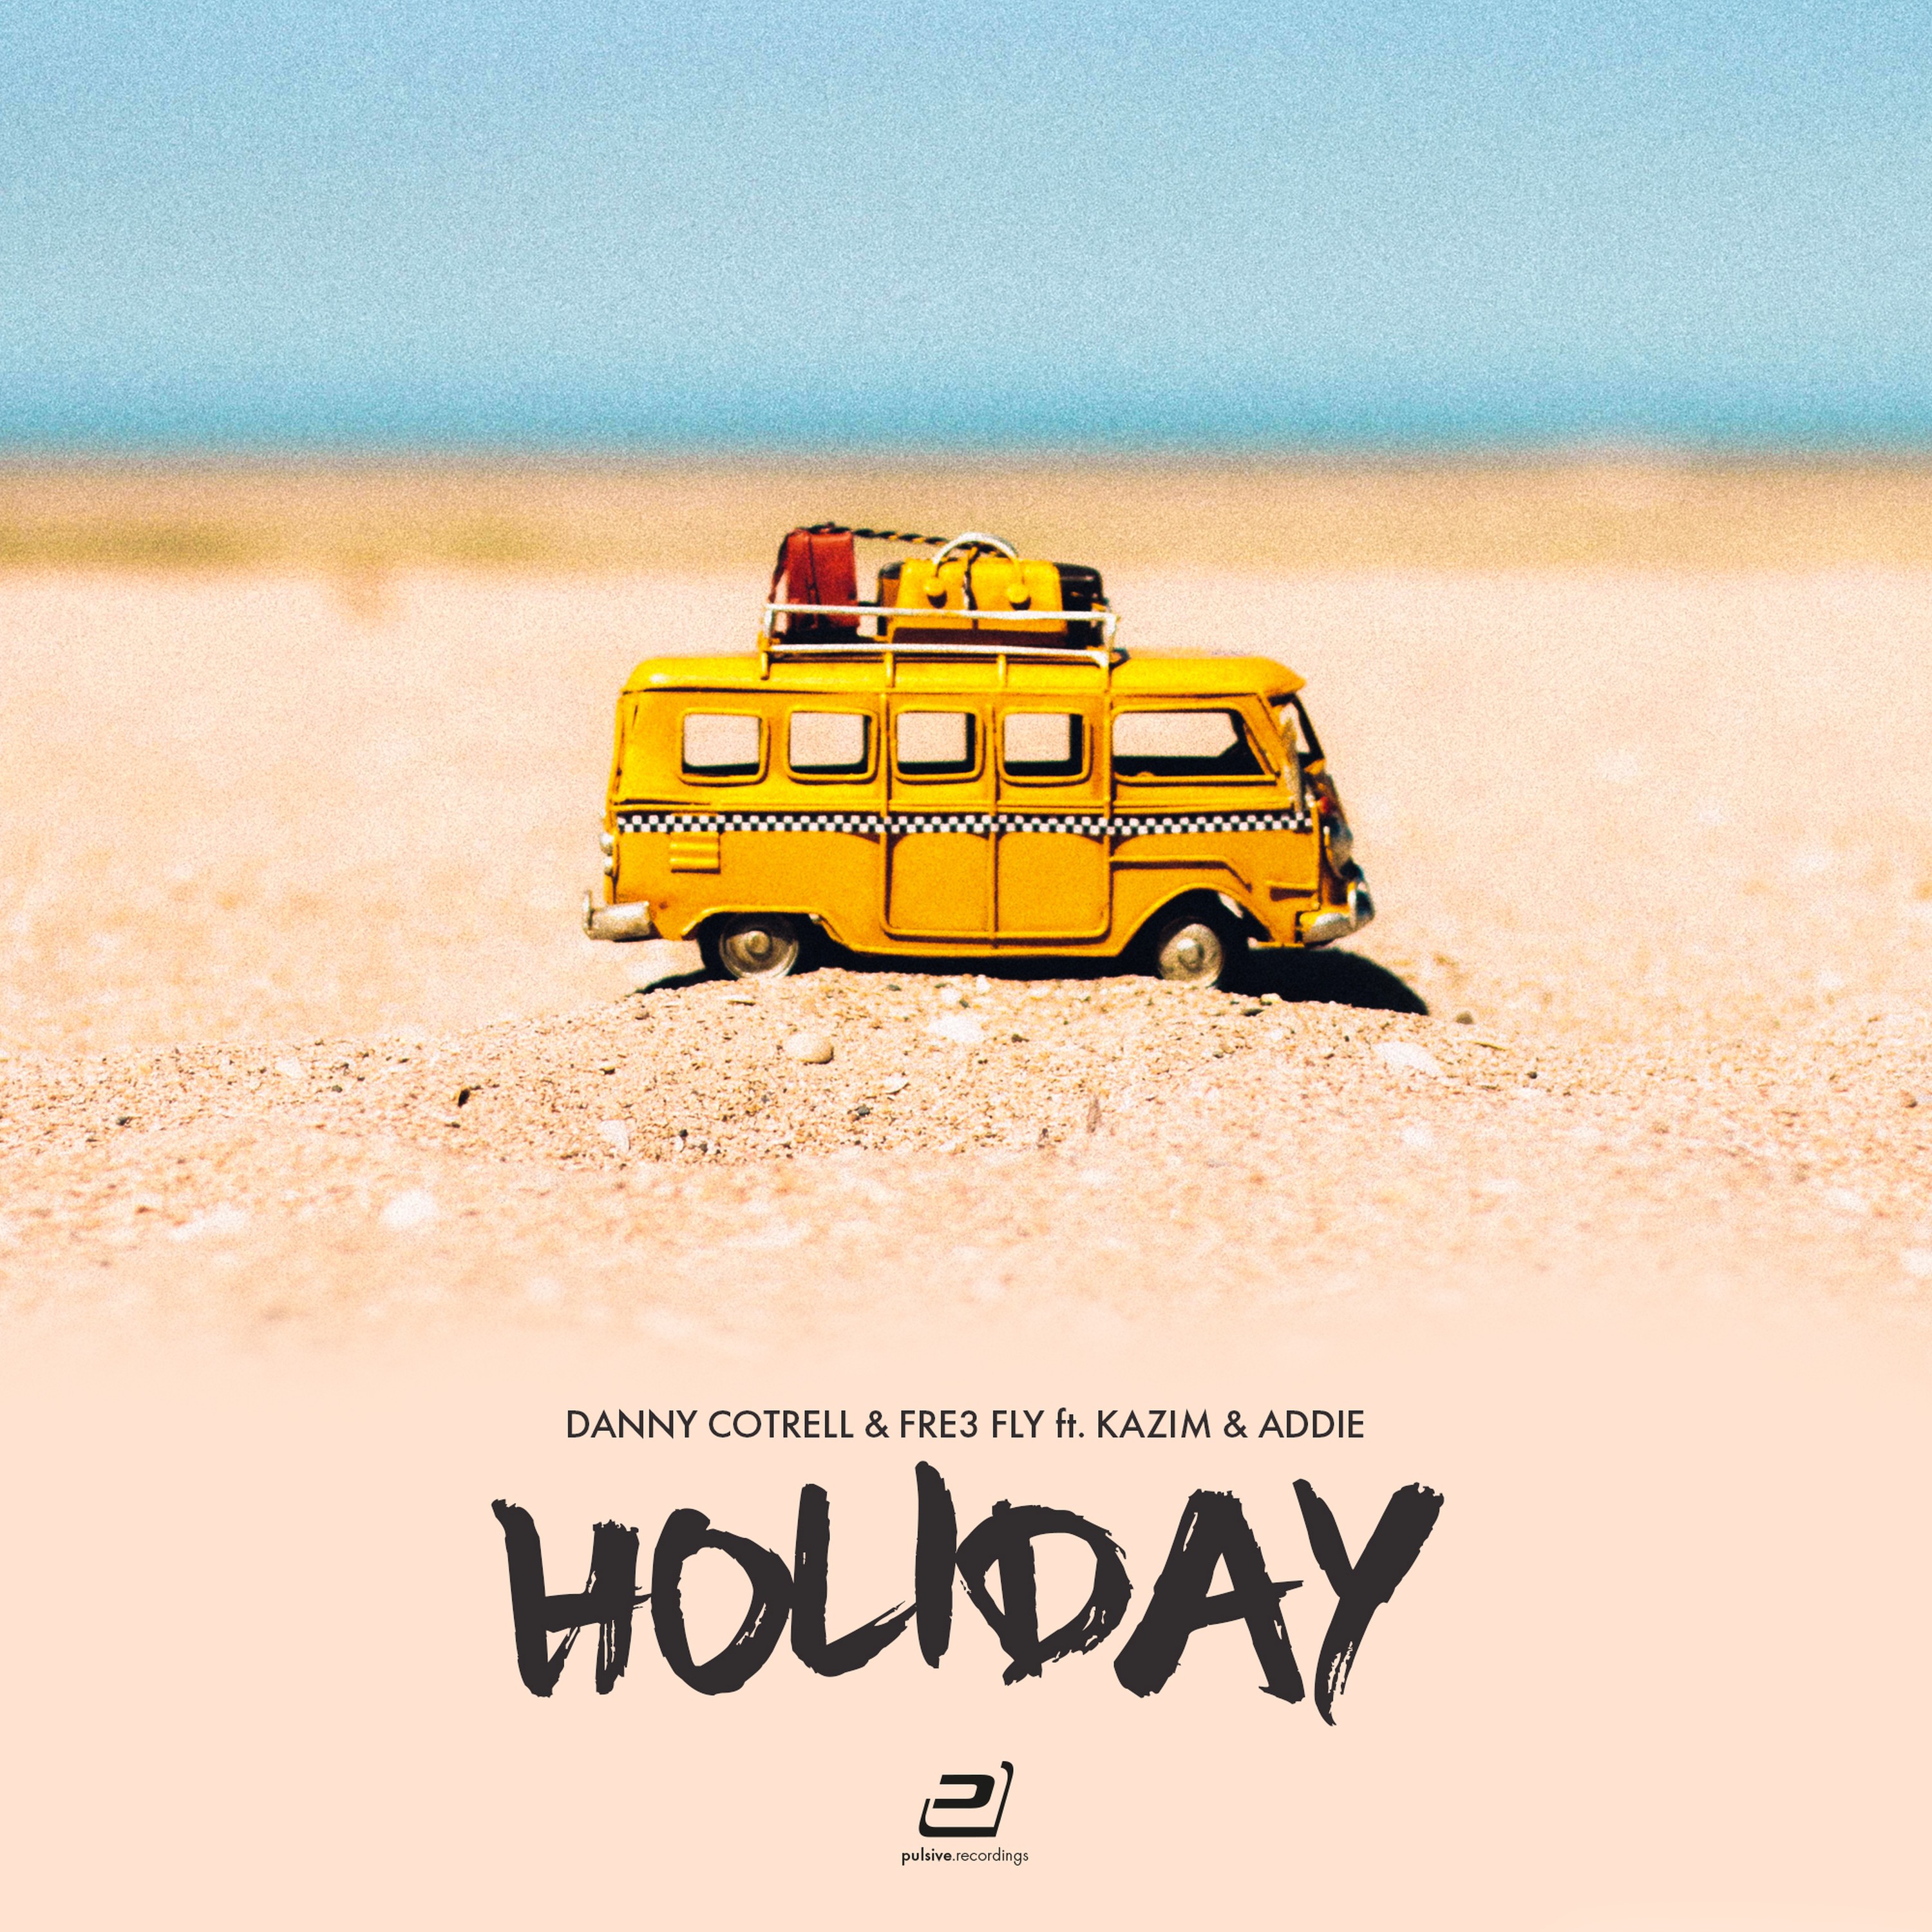 Holiday (Dancefloor Kingz Vs. Sunvibez Remix)